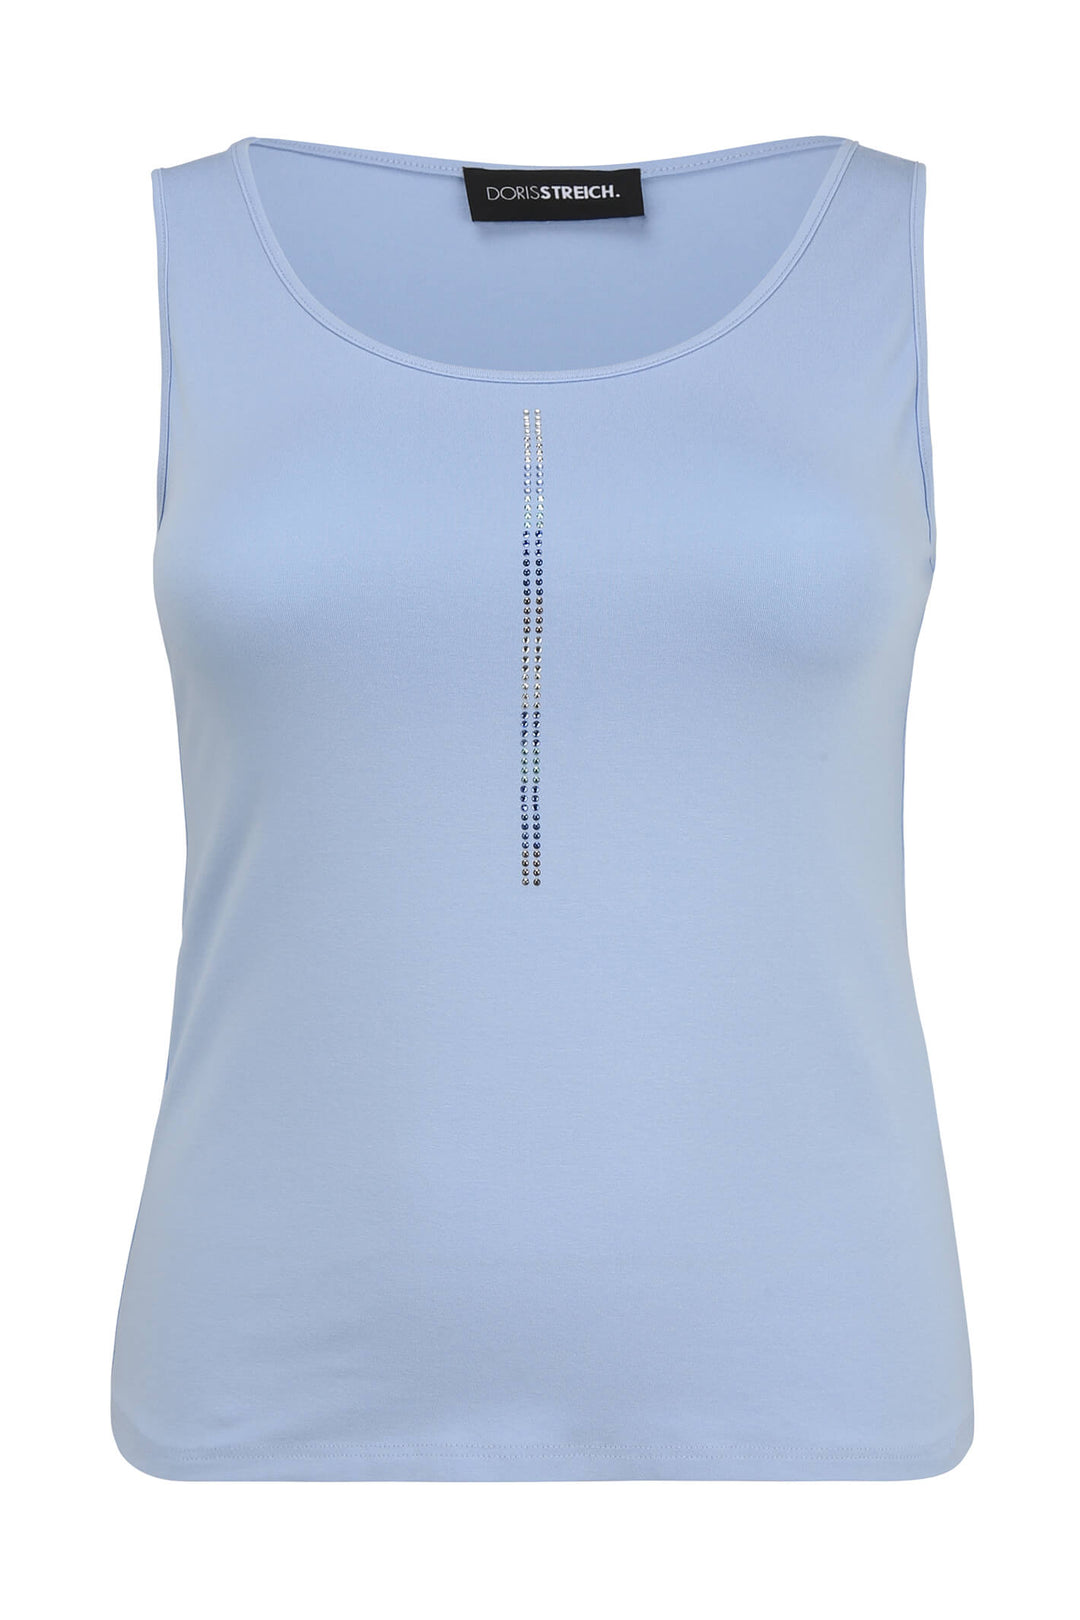 Doris Streich 555 270 55 Blue Vest Top With Diamante - Shirley Allum Boutique